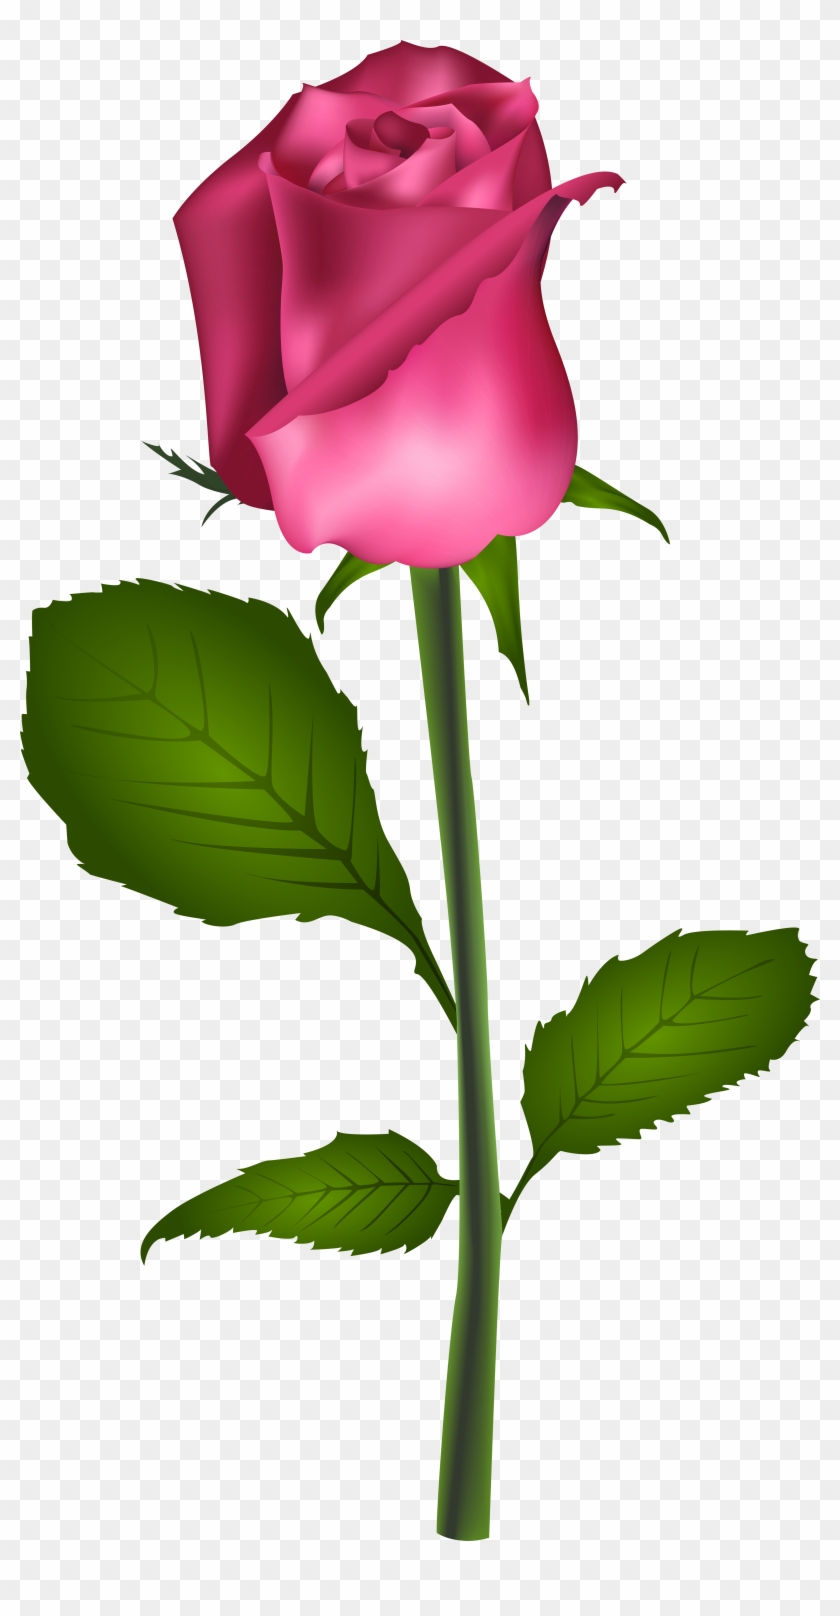 Blue Rose Flower Best Roses Clip Art - Blue Rose Flower Best Roses Clip Art #479138